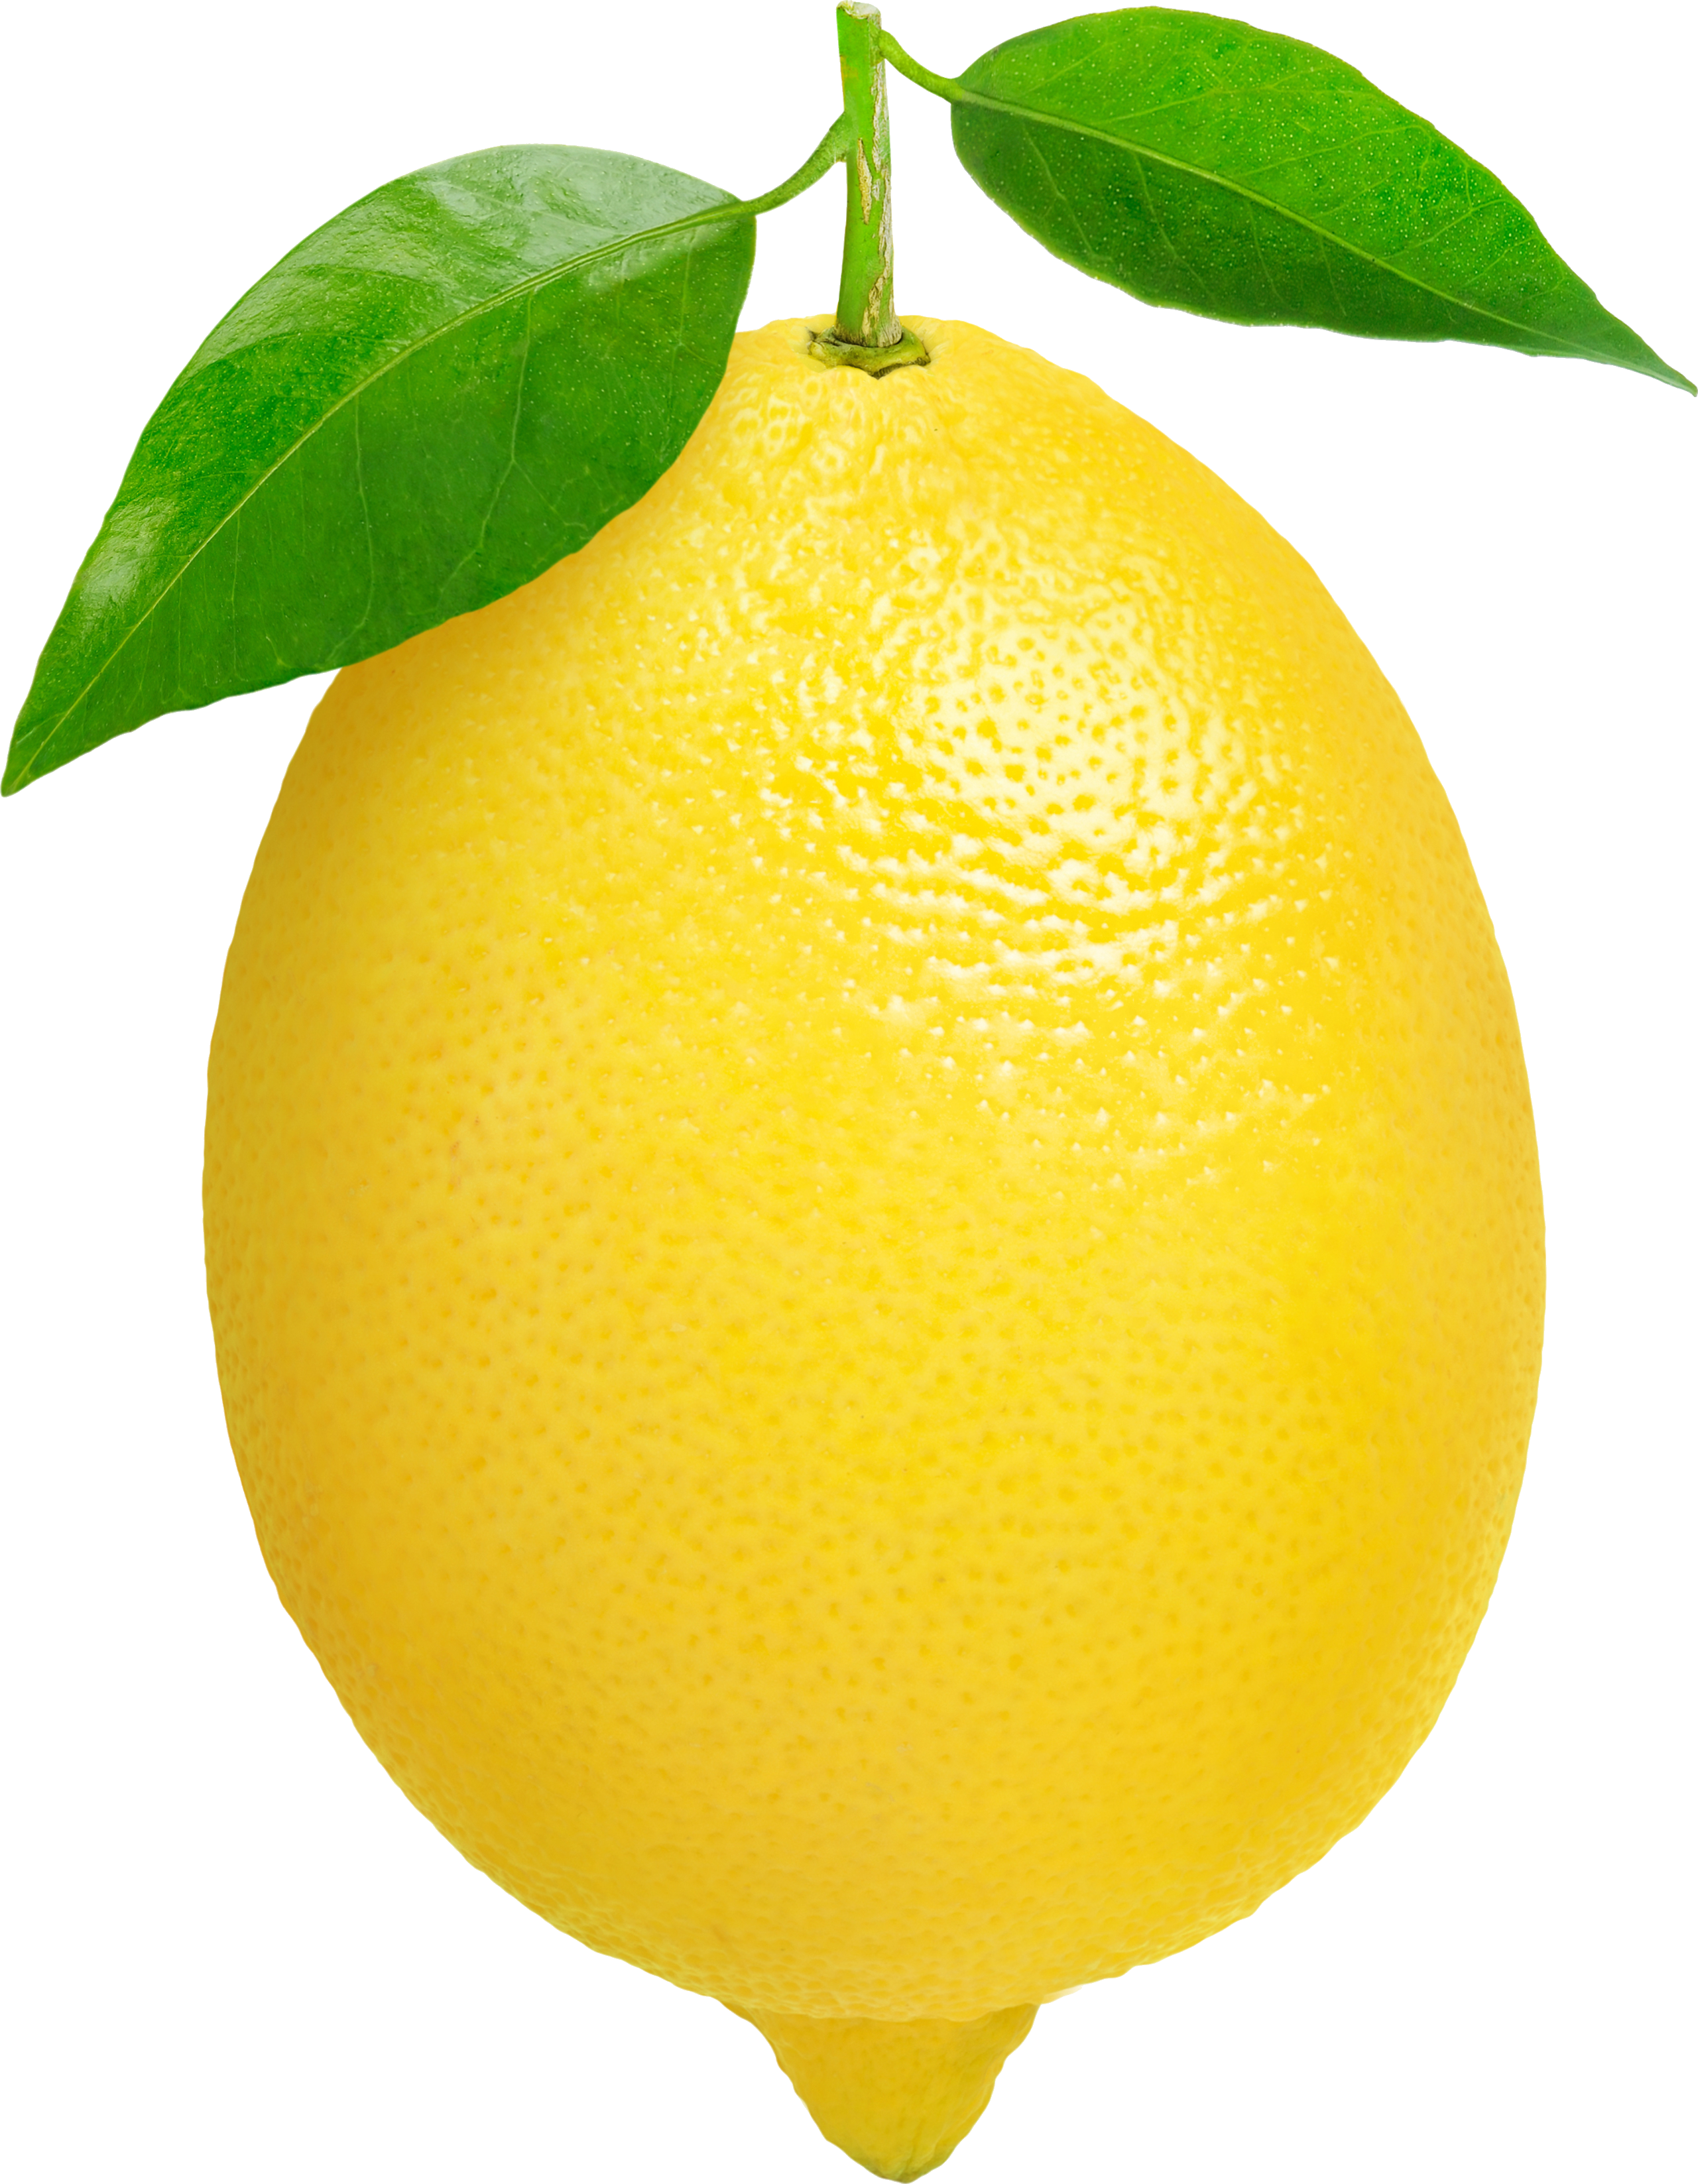 Juice clipart citrus. Lemon can lighten skin